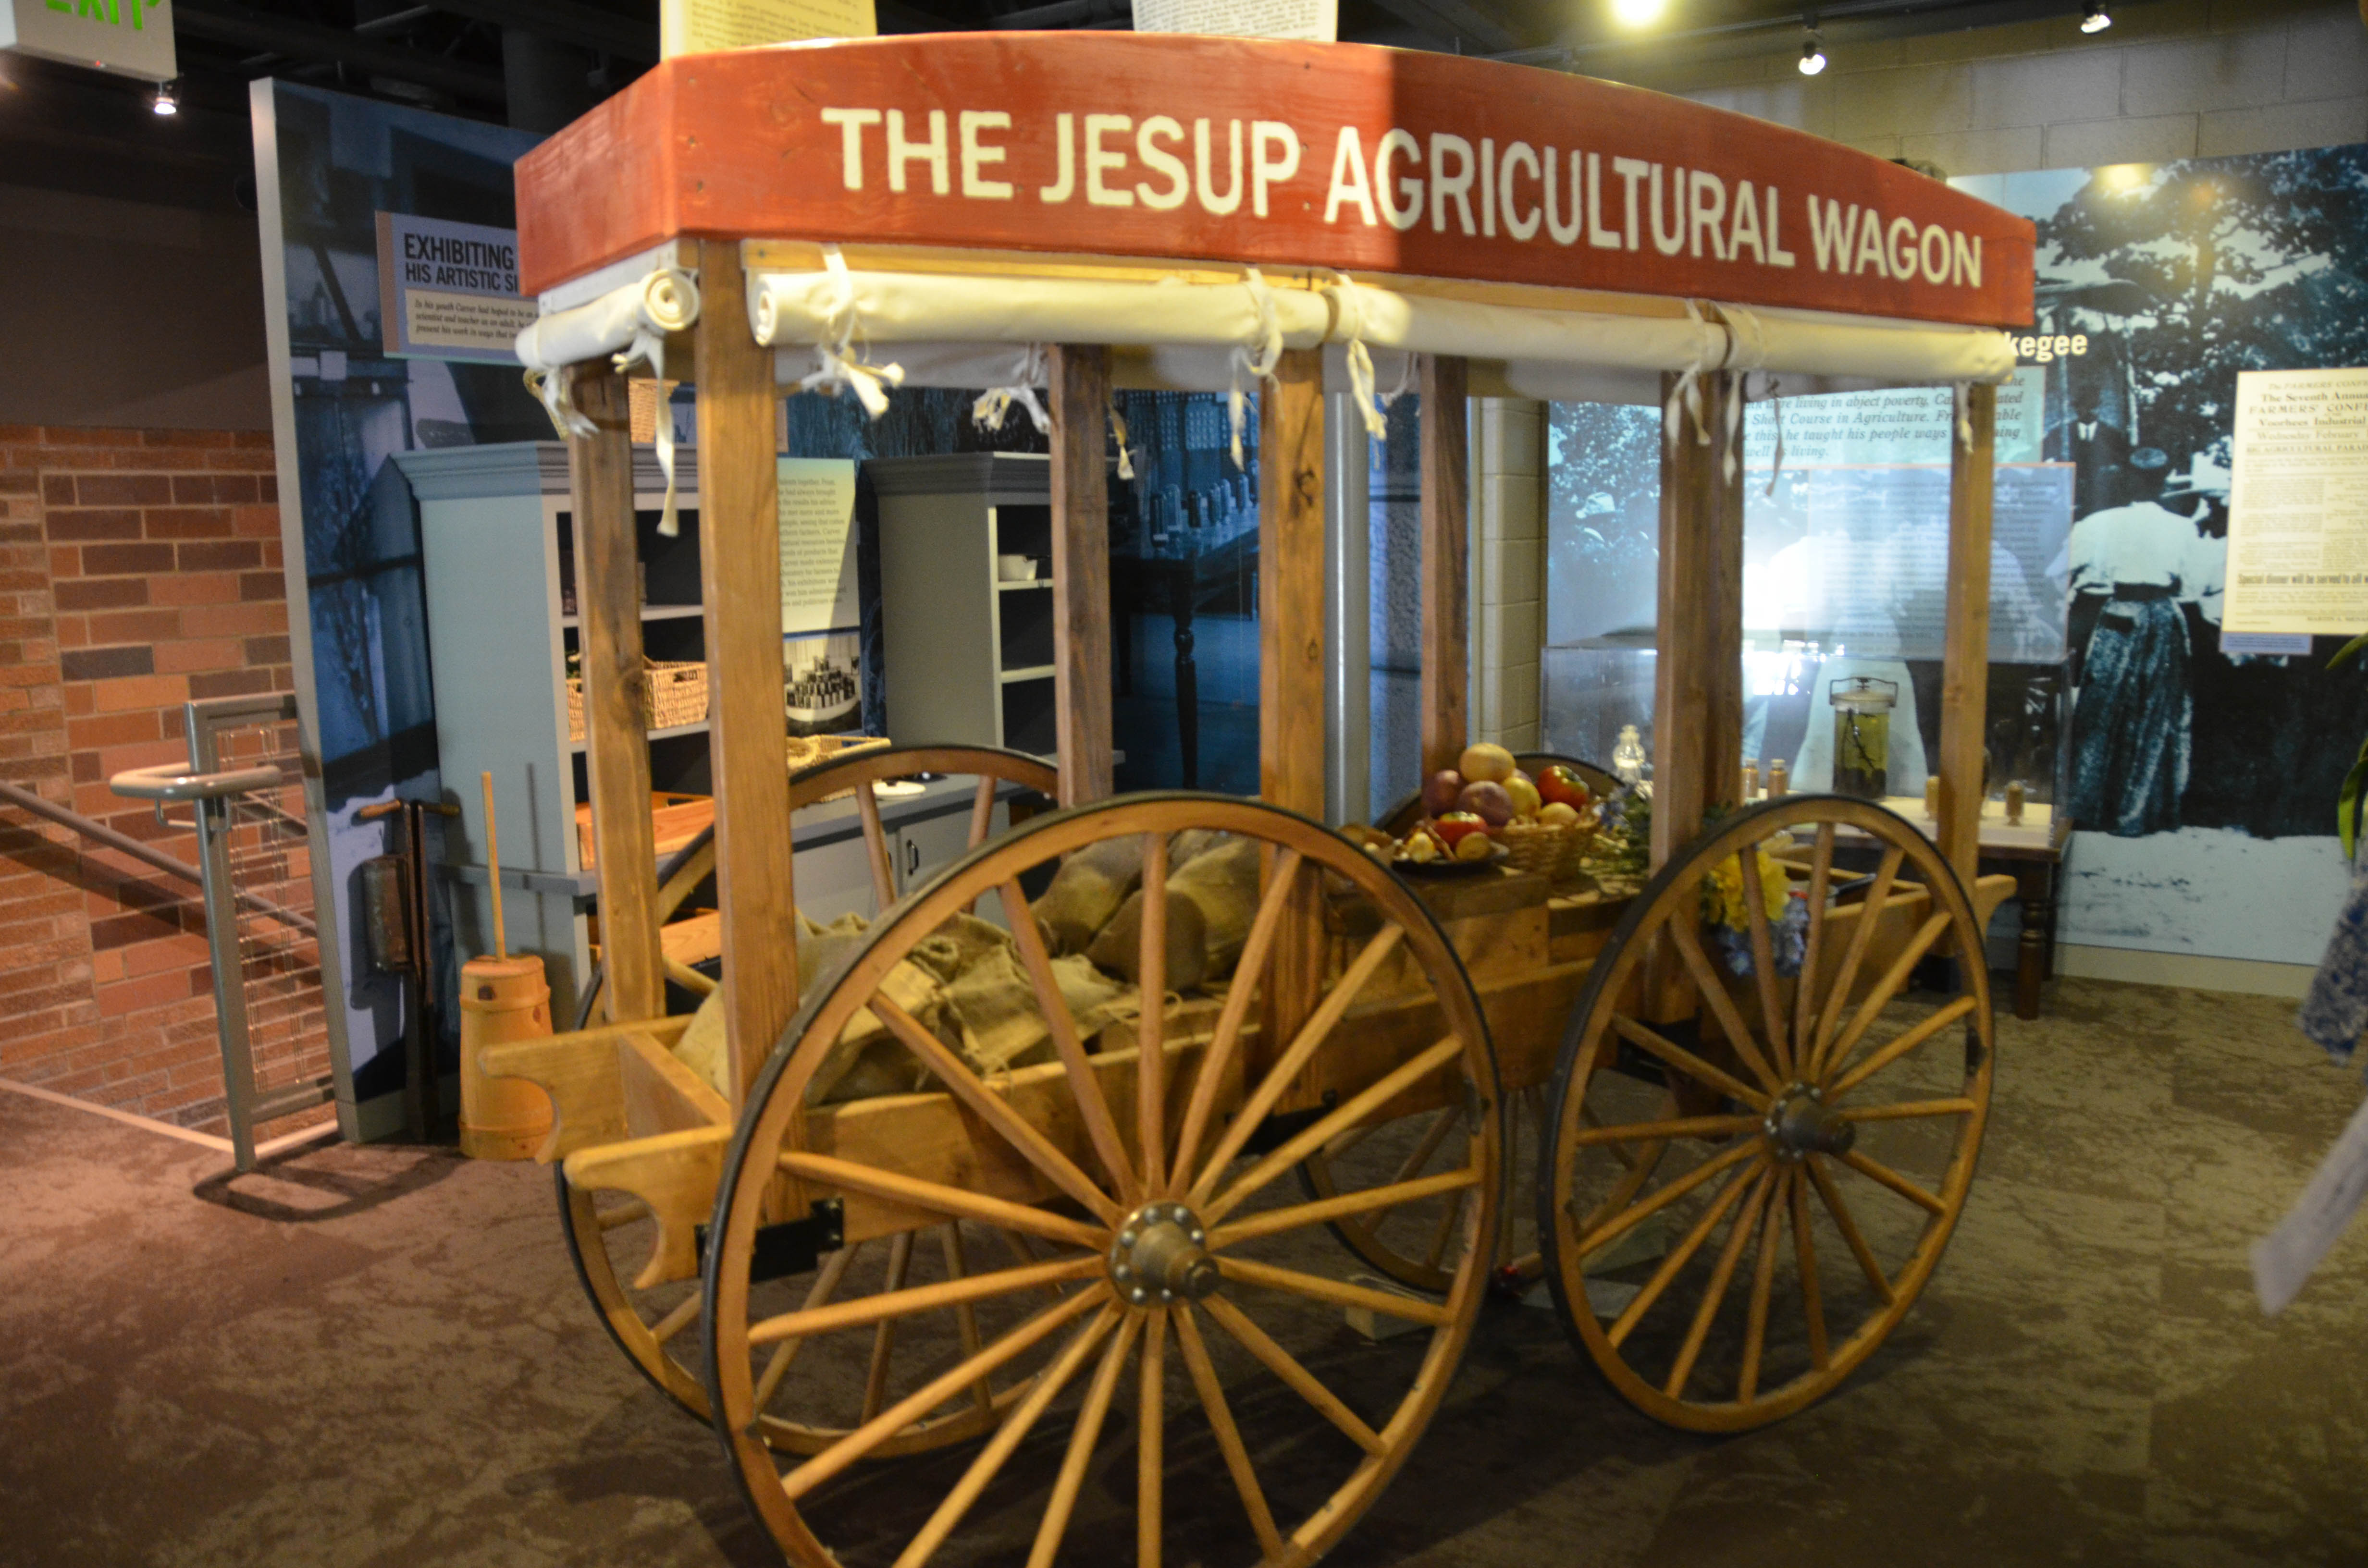 A replica of the Jesup Wagon.